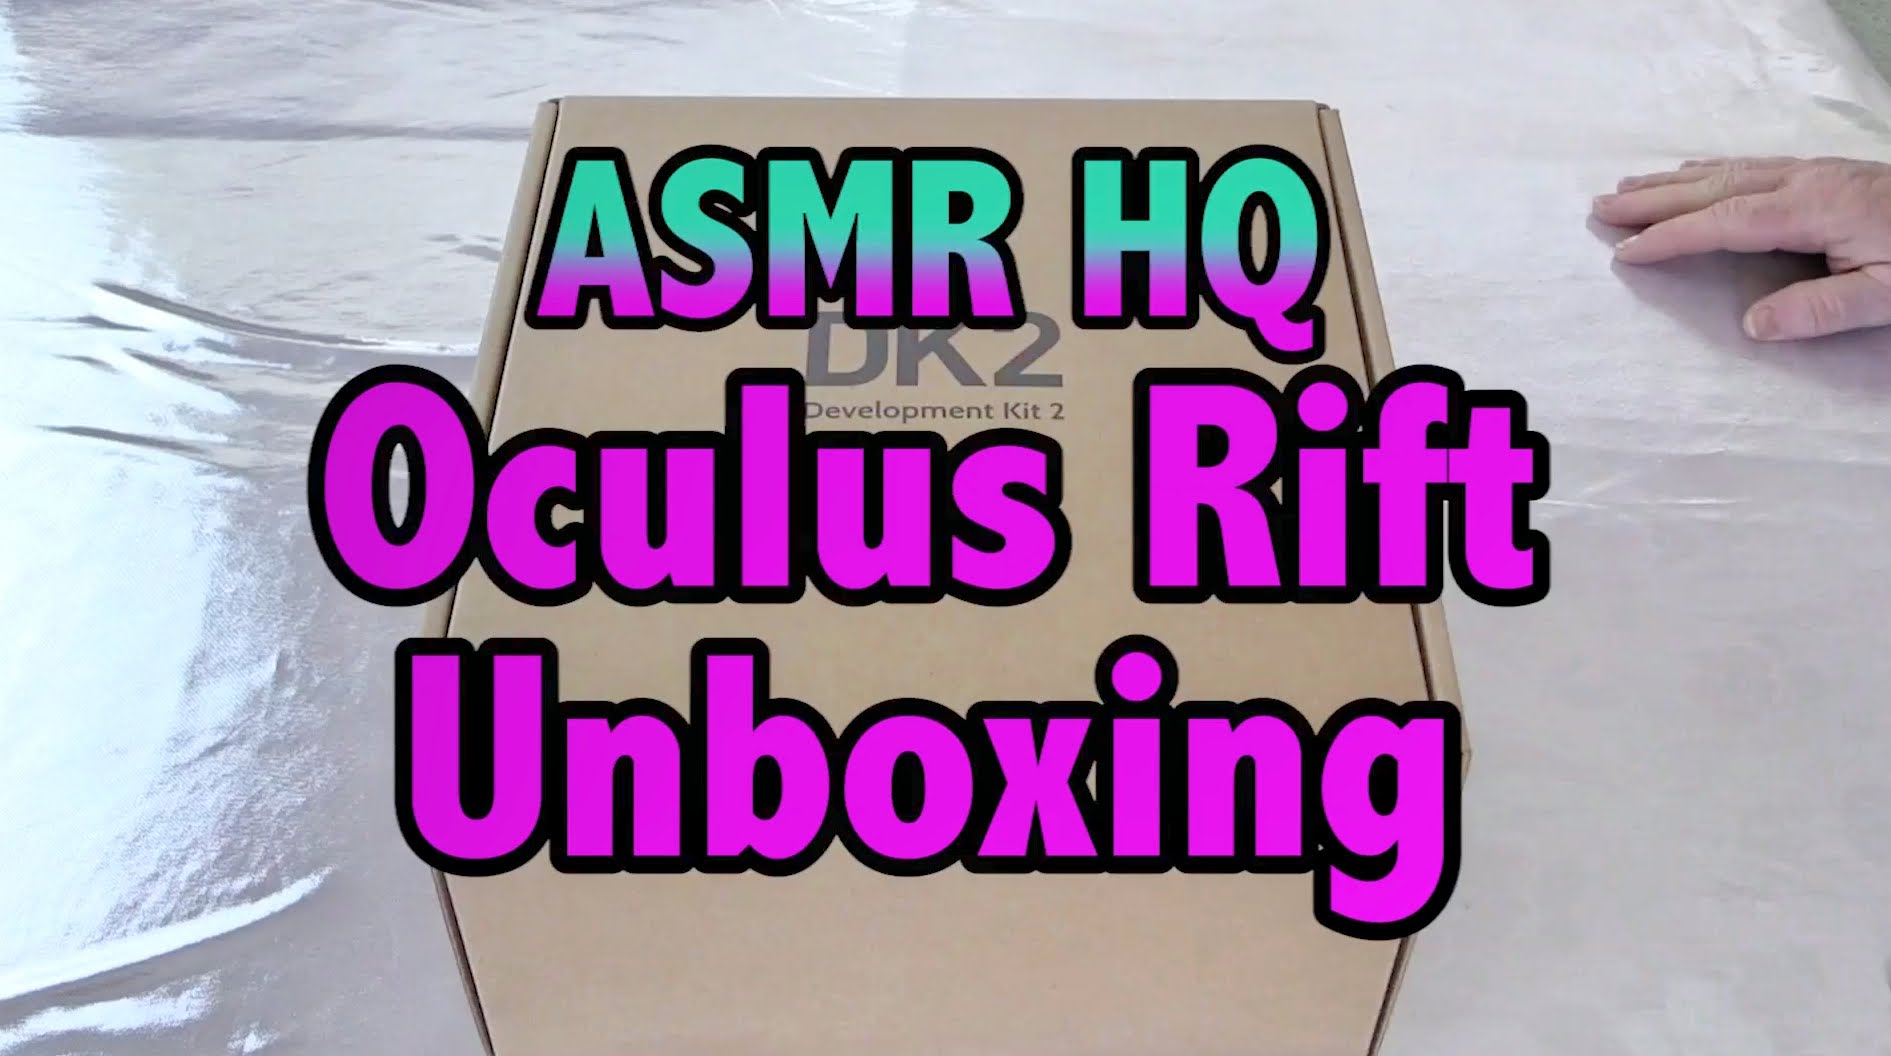 ASMR: Oculus Rift Unboxing